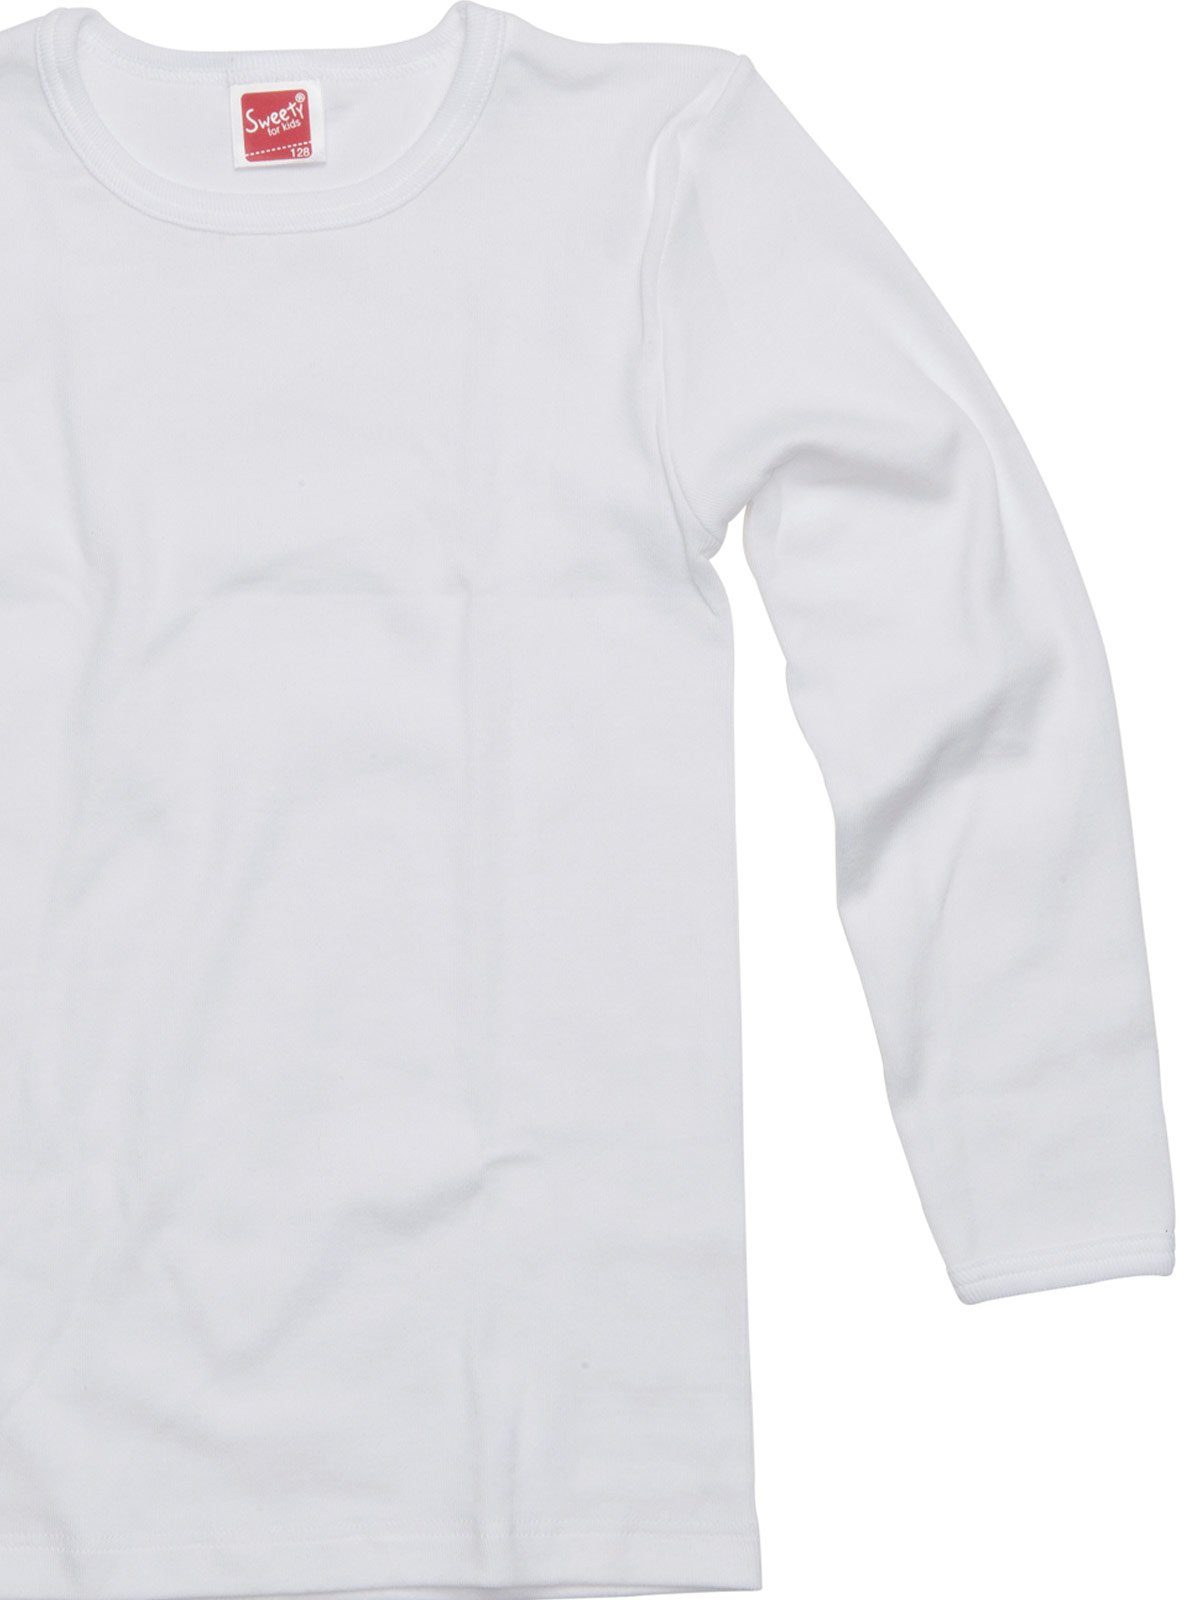 hohe 1-St) Winterwäsche Kinder Shirt Markenqualität (Stück, Achselhemd for Kids weiss Sweety